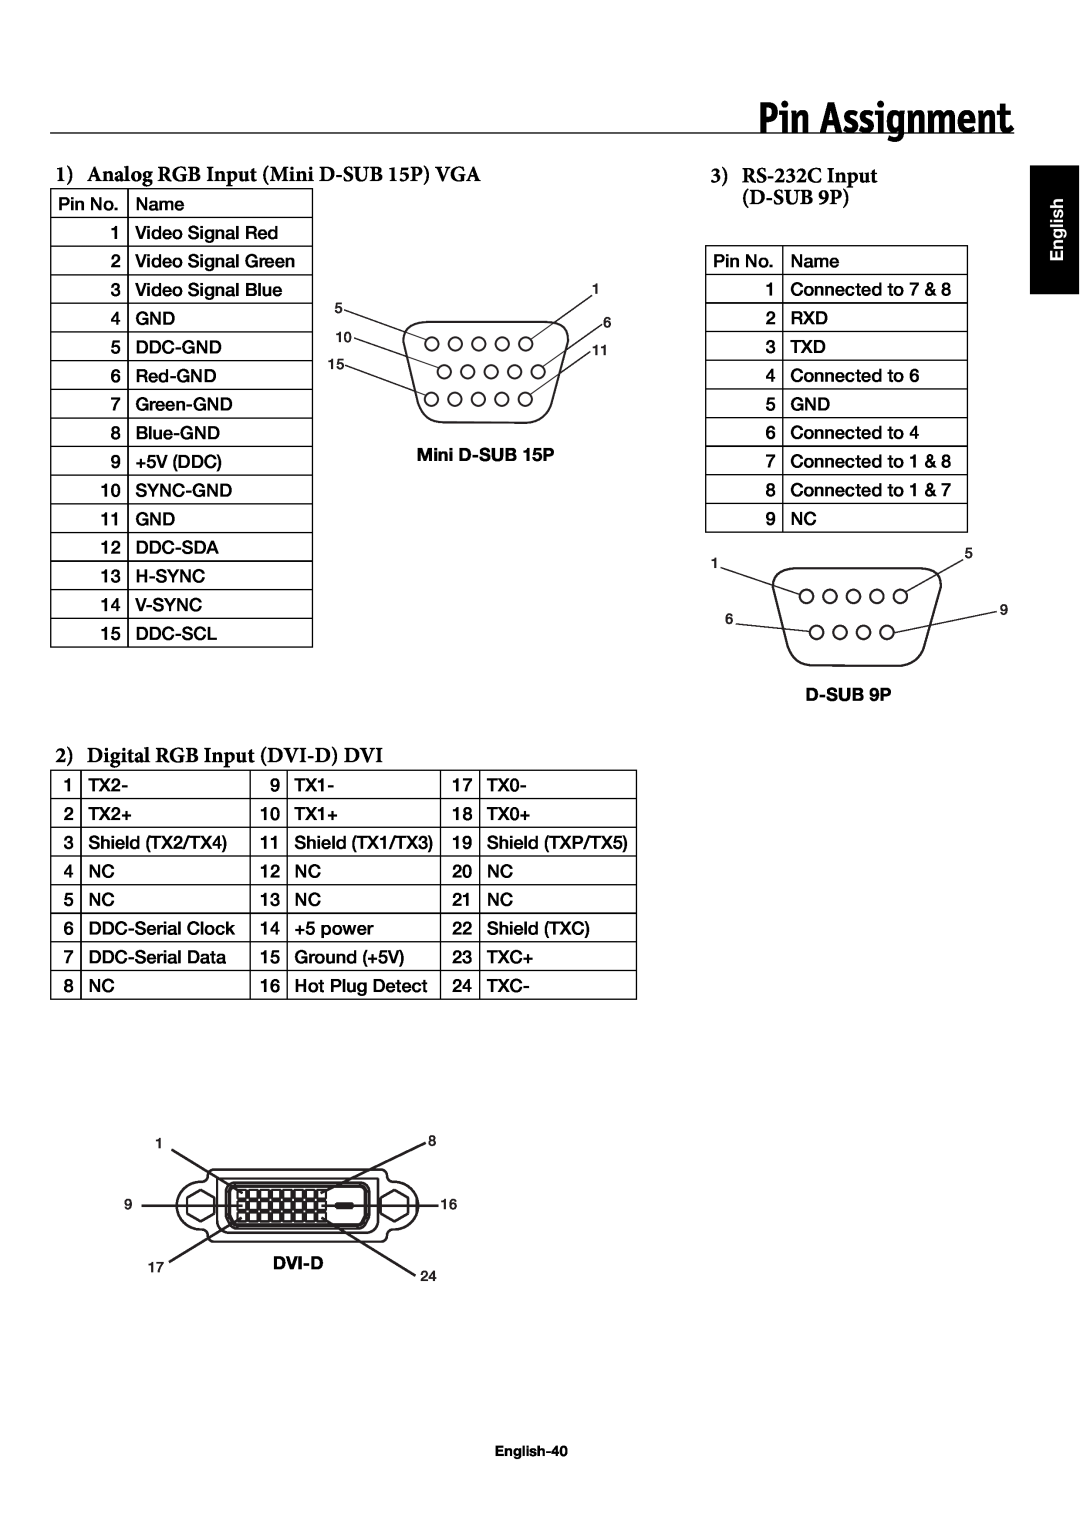 NEC 50XP10 Pin Assignment, Analog RGB Input Mini D-SUB 15P VGA, RS-232C Input, D-SUB 9P, Digital RGB Input DVI-D DVI 